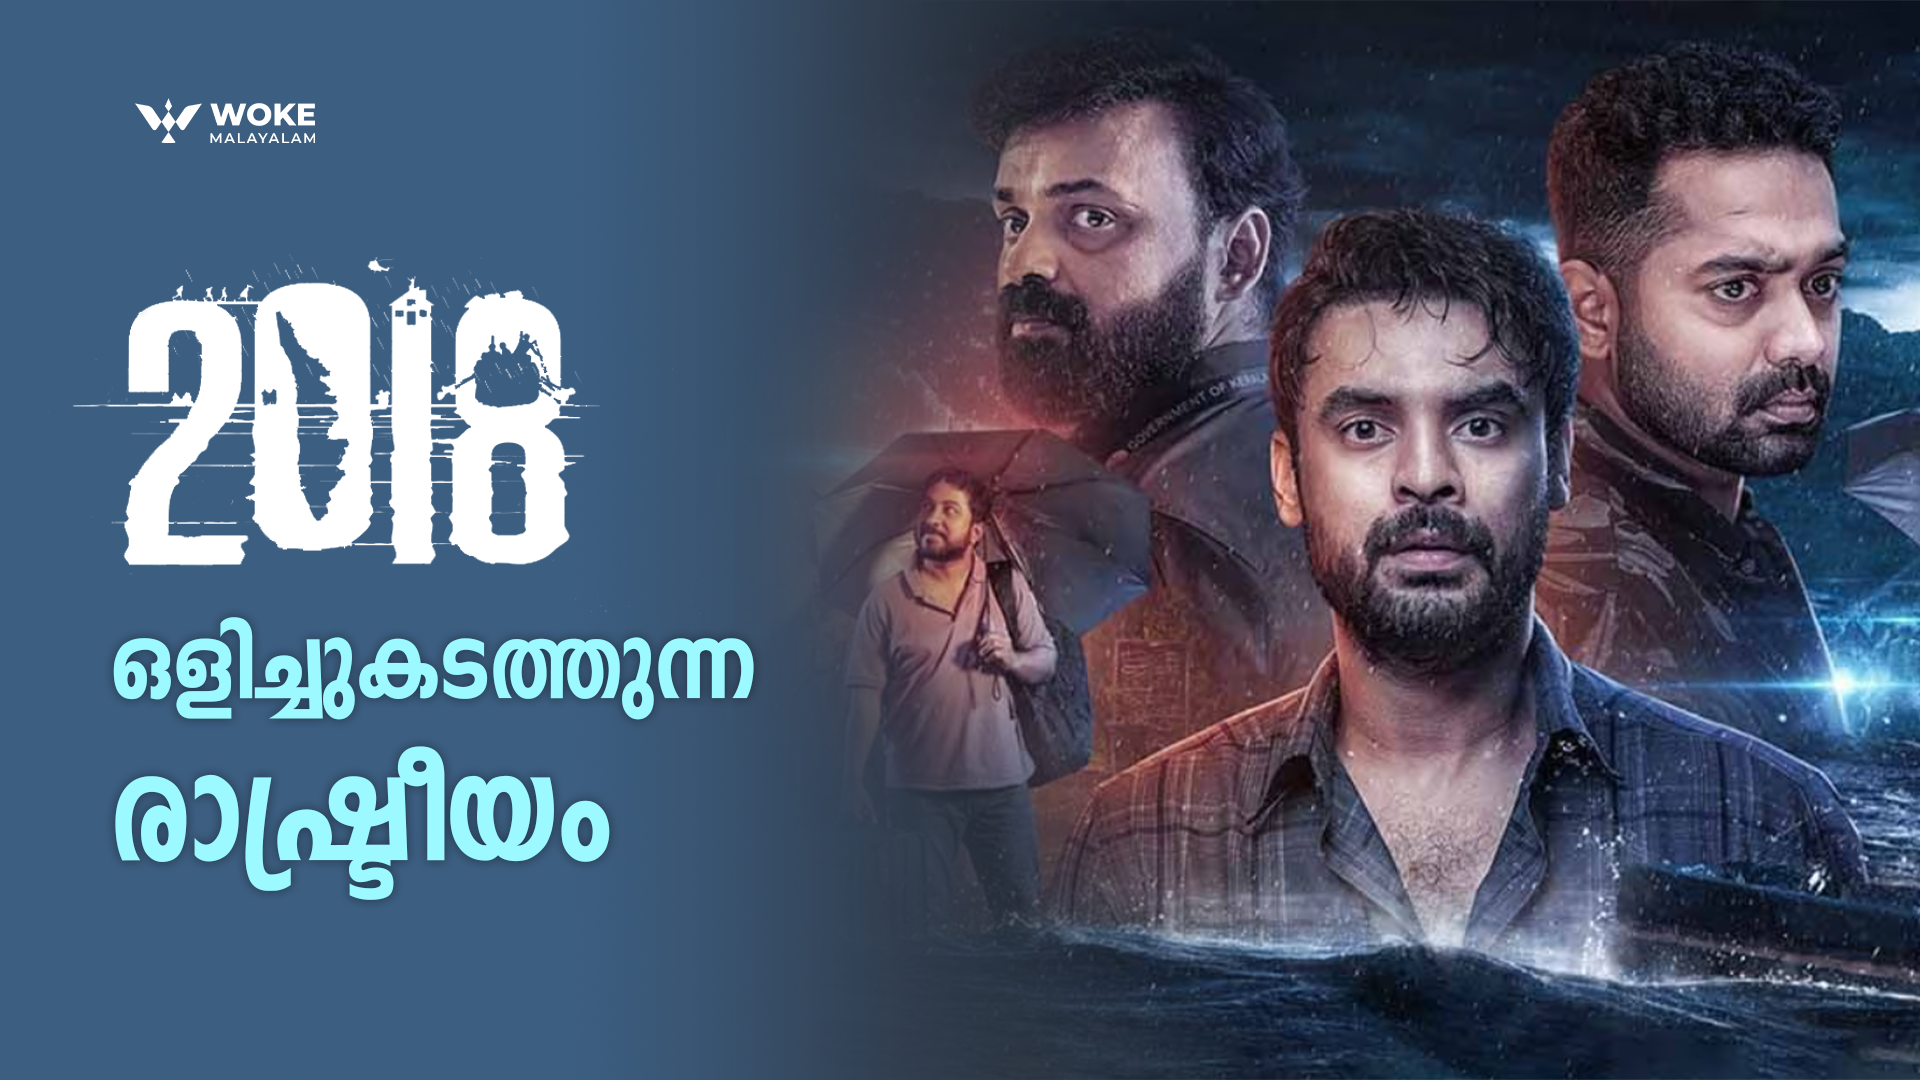 2018 movie malayalam